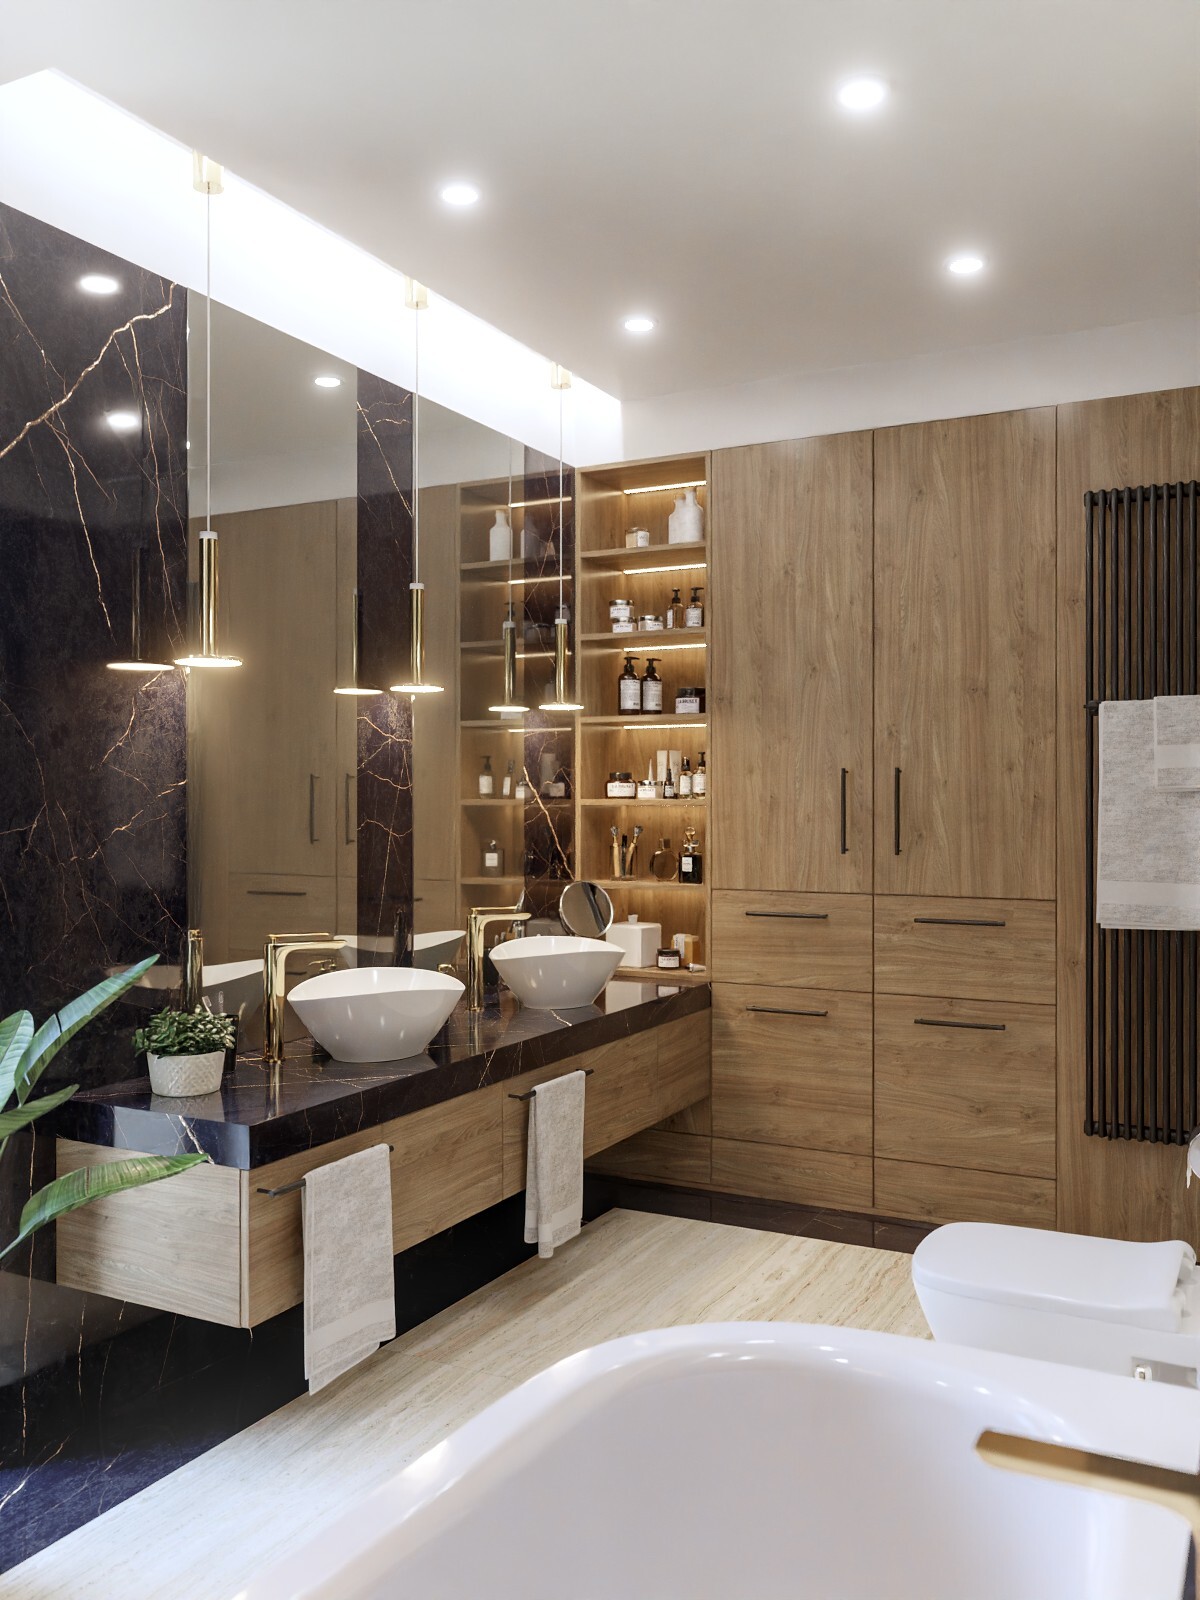 Next iteration of glamour Bathroom - Interior Archviz - Blender Cycles-X